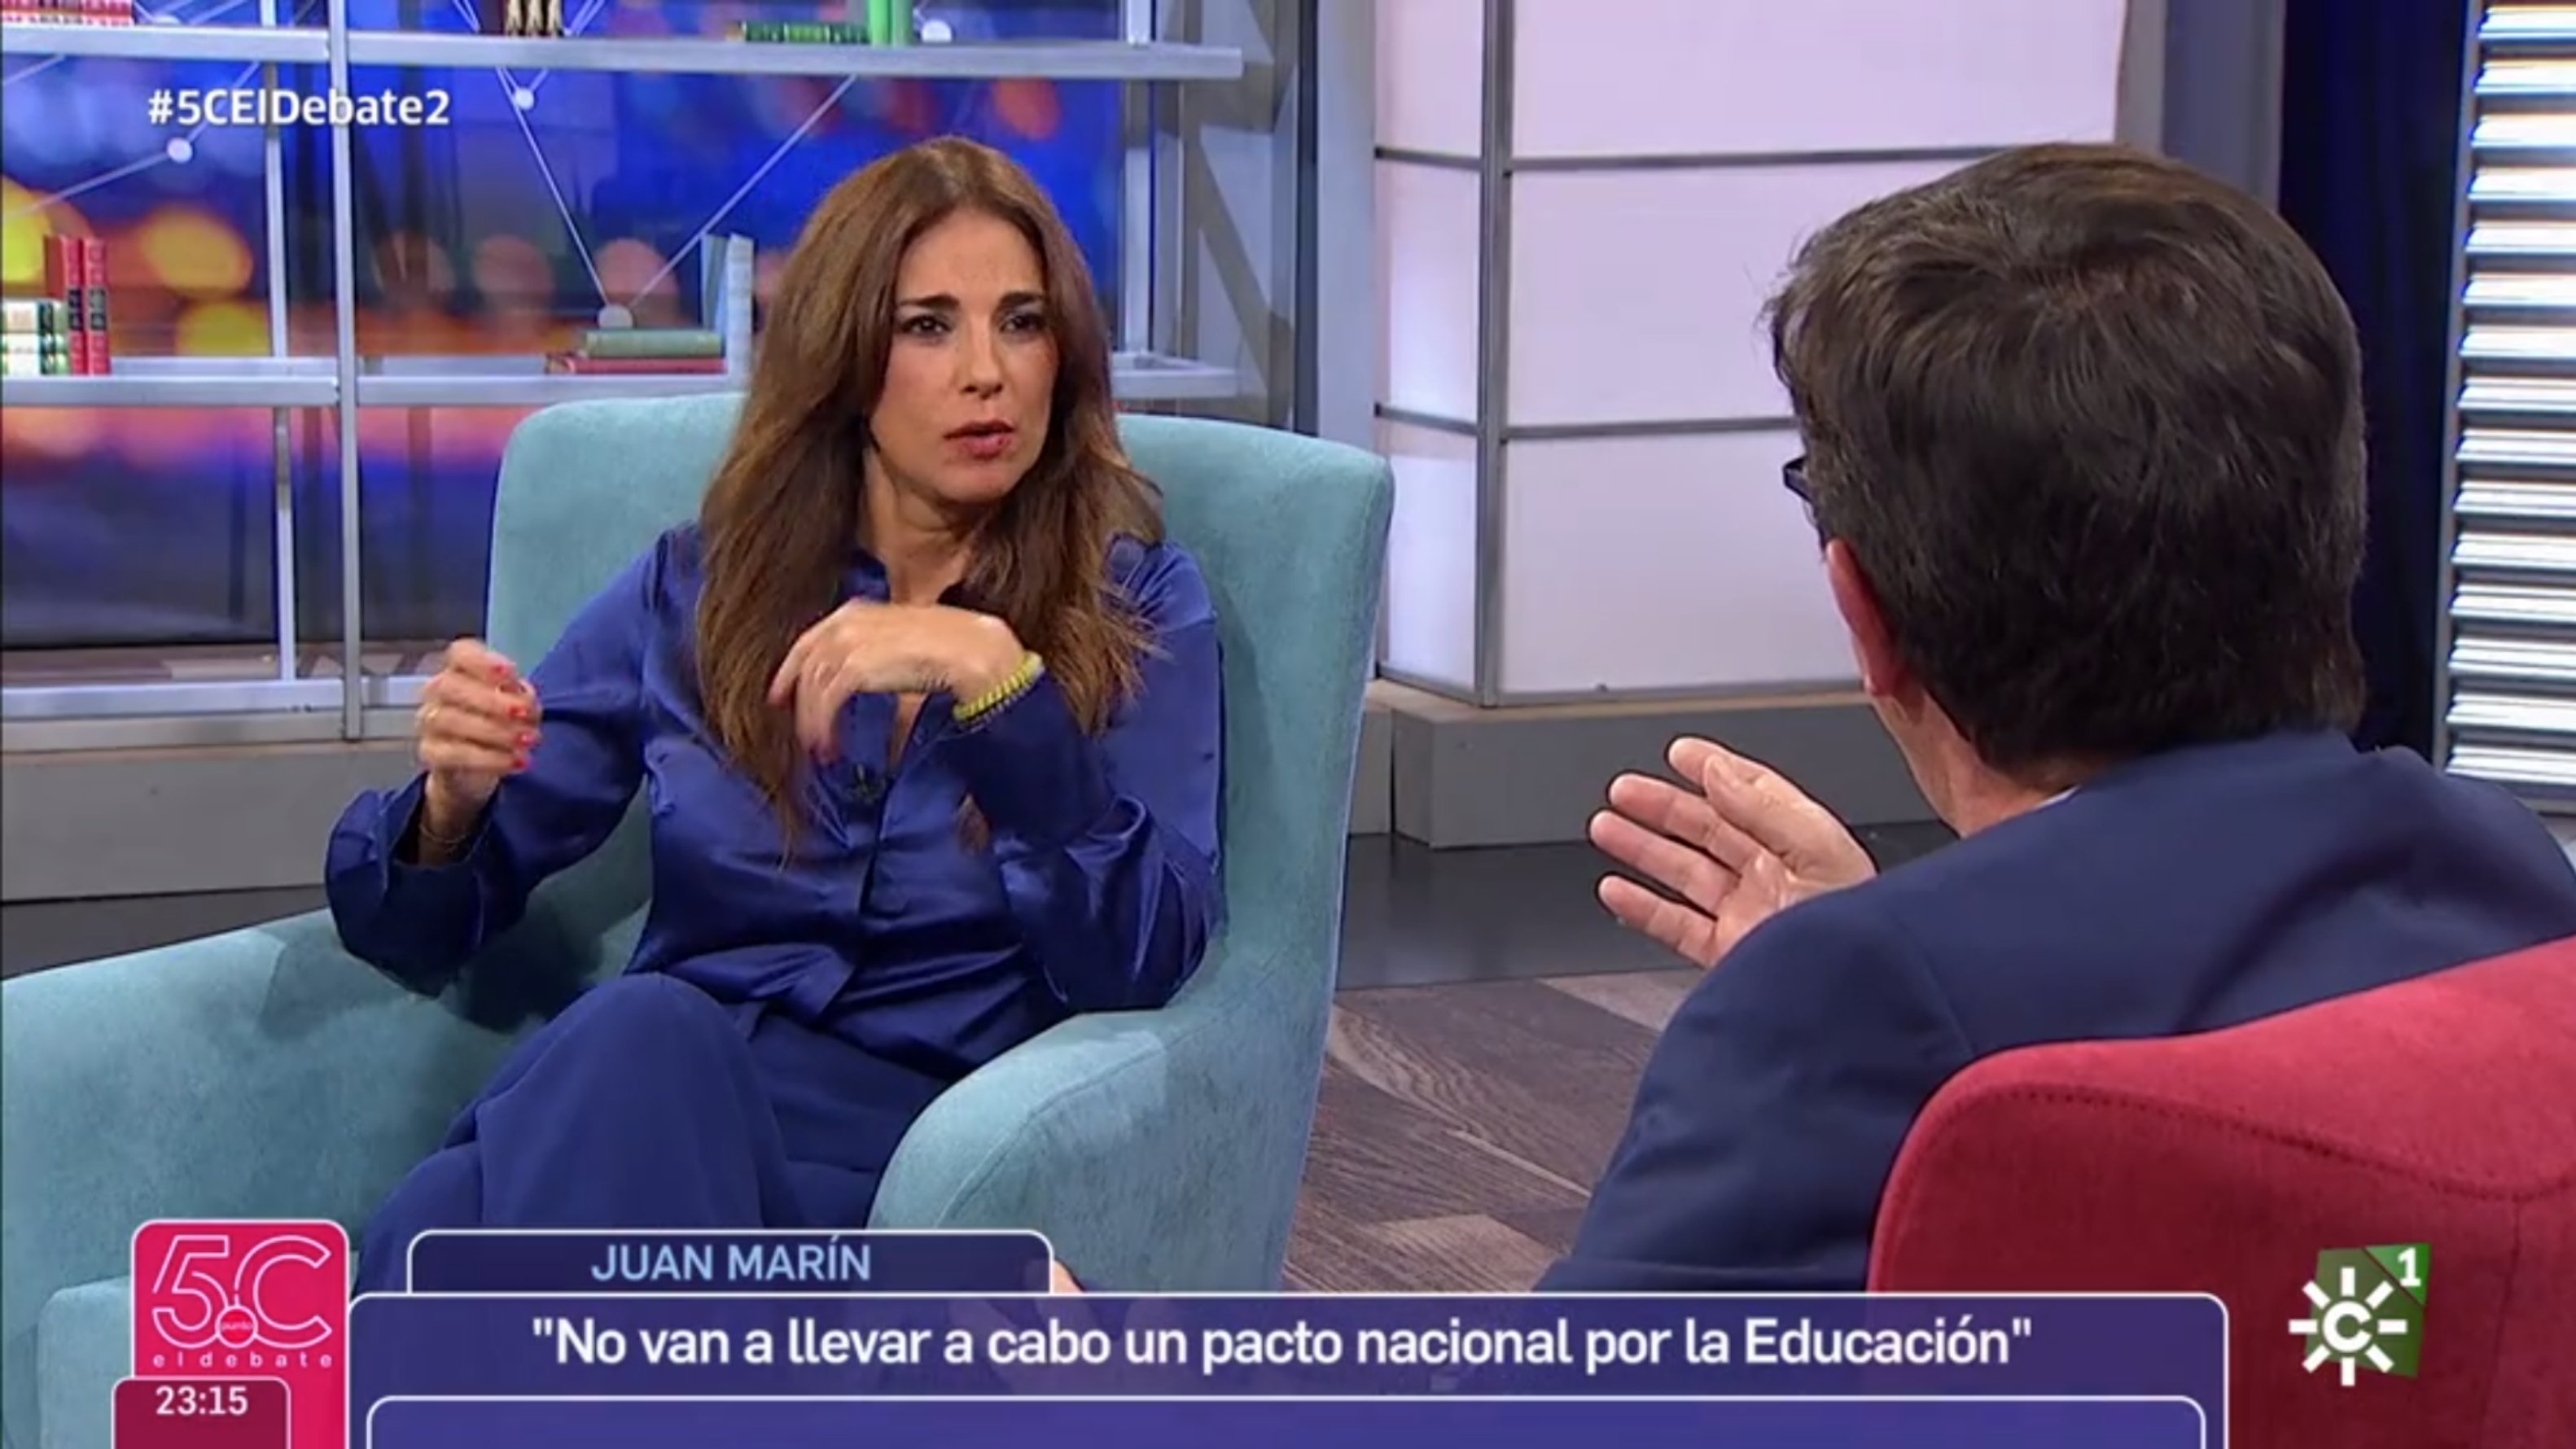 Nyap ridícul de Mariló Montero a la tele andalusa de VOX: "¿qué fuma?"